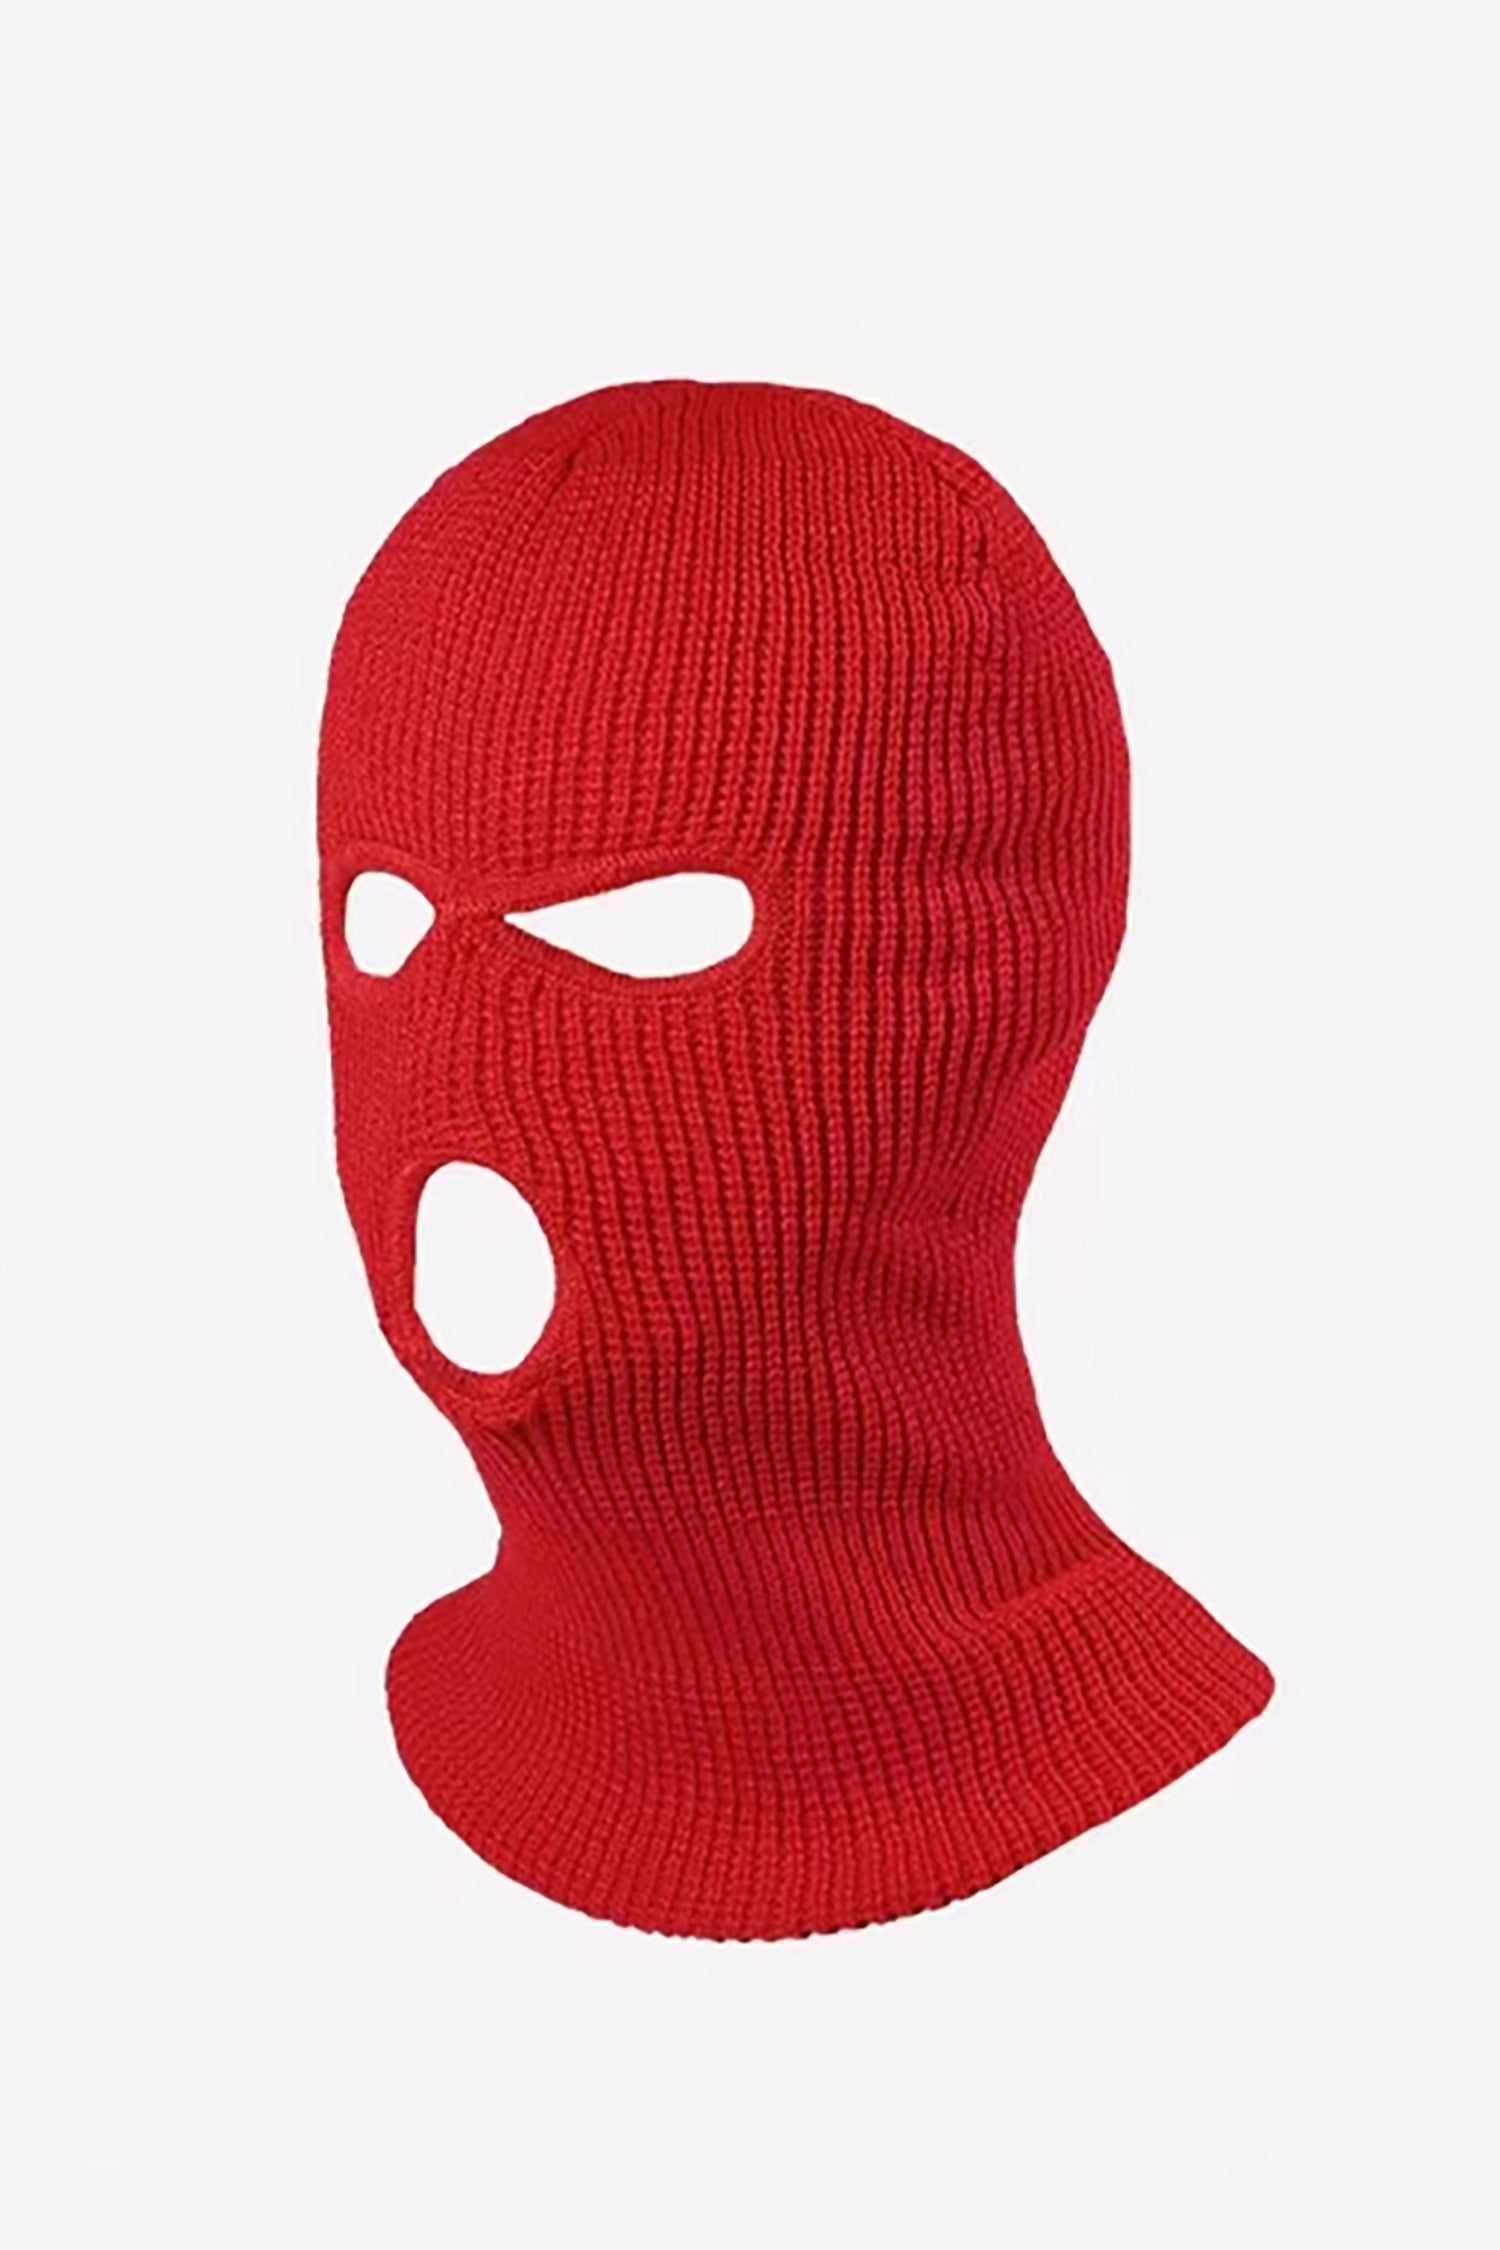 UrbanOG - Face Full Coverage Ski Mask with Three Holes - ACCESSORIES